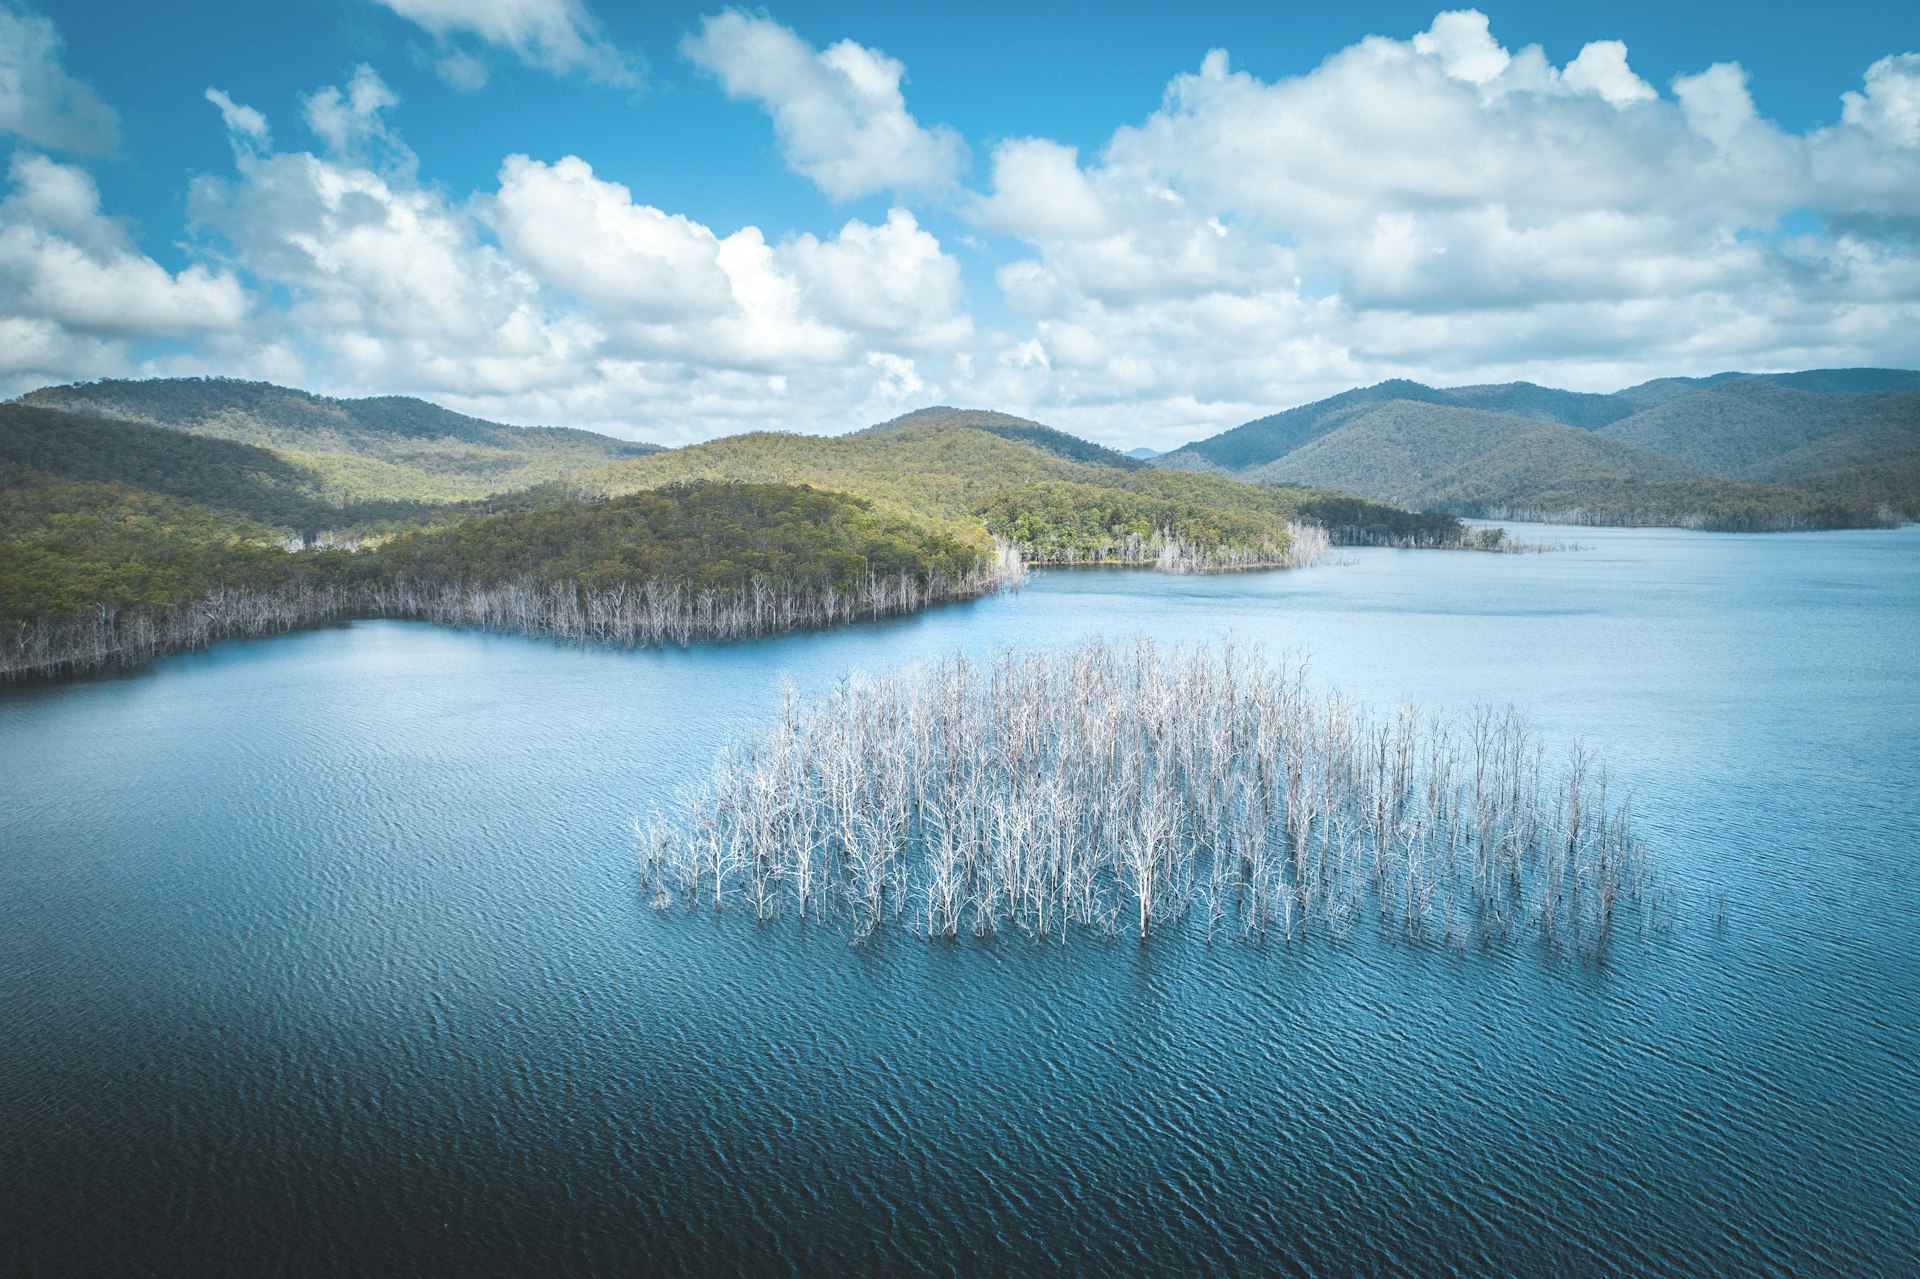 Drone photography, Queensland, Australia